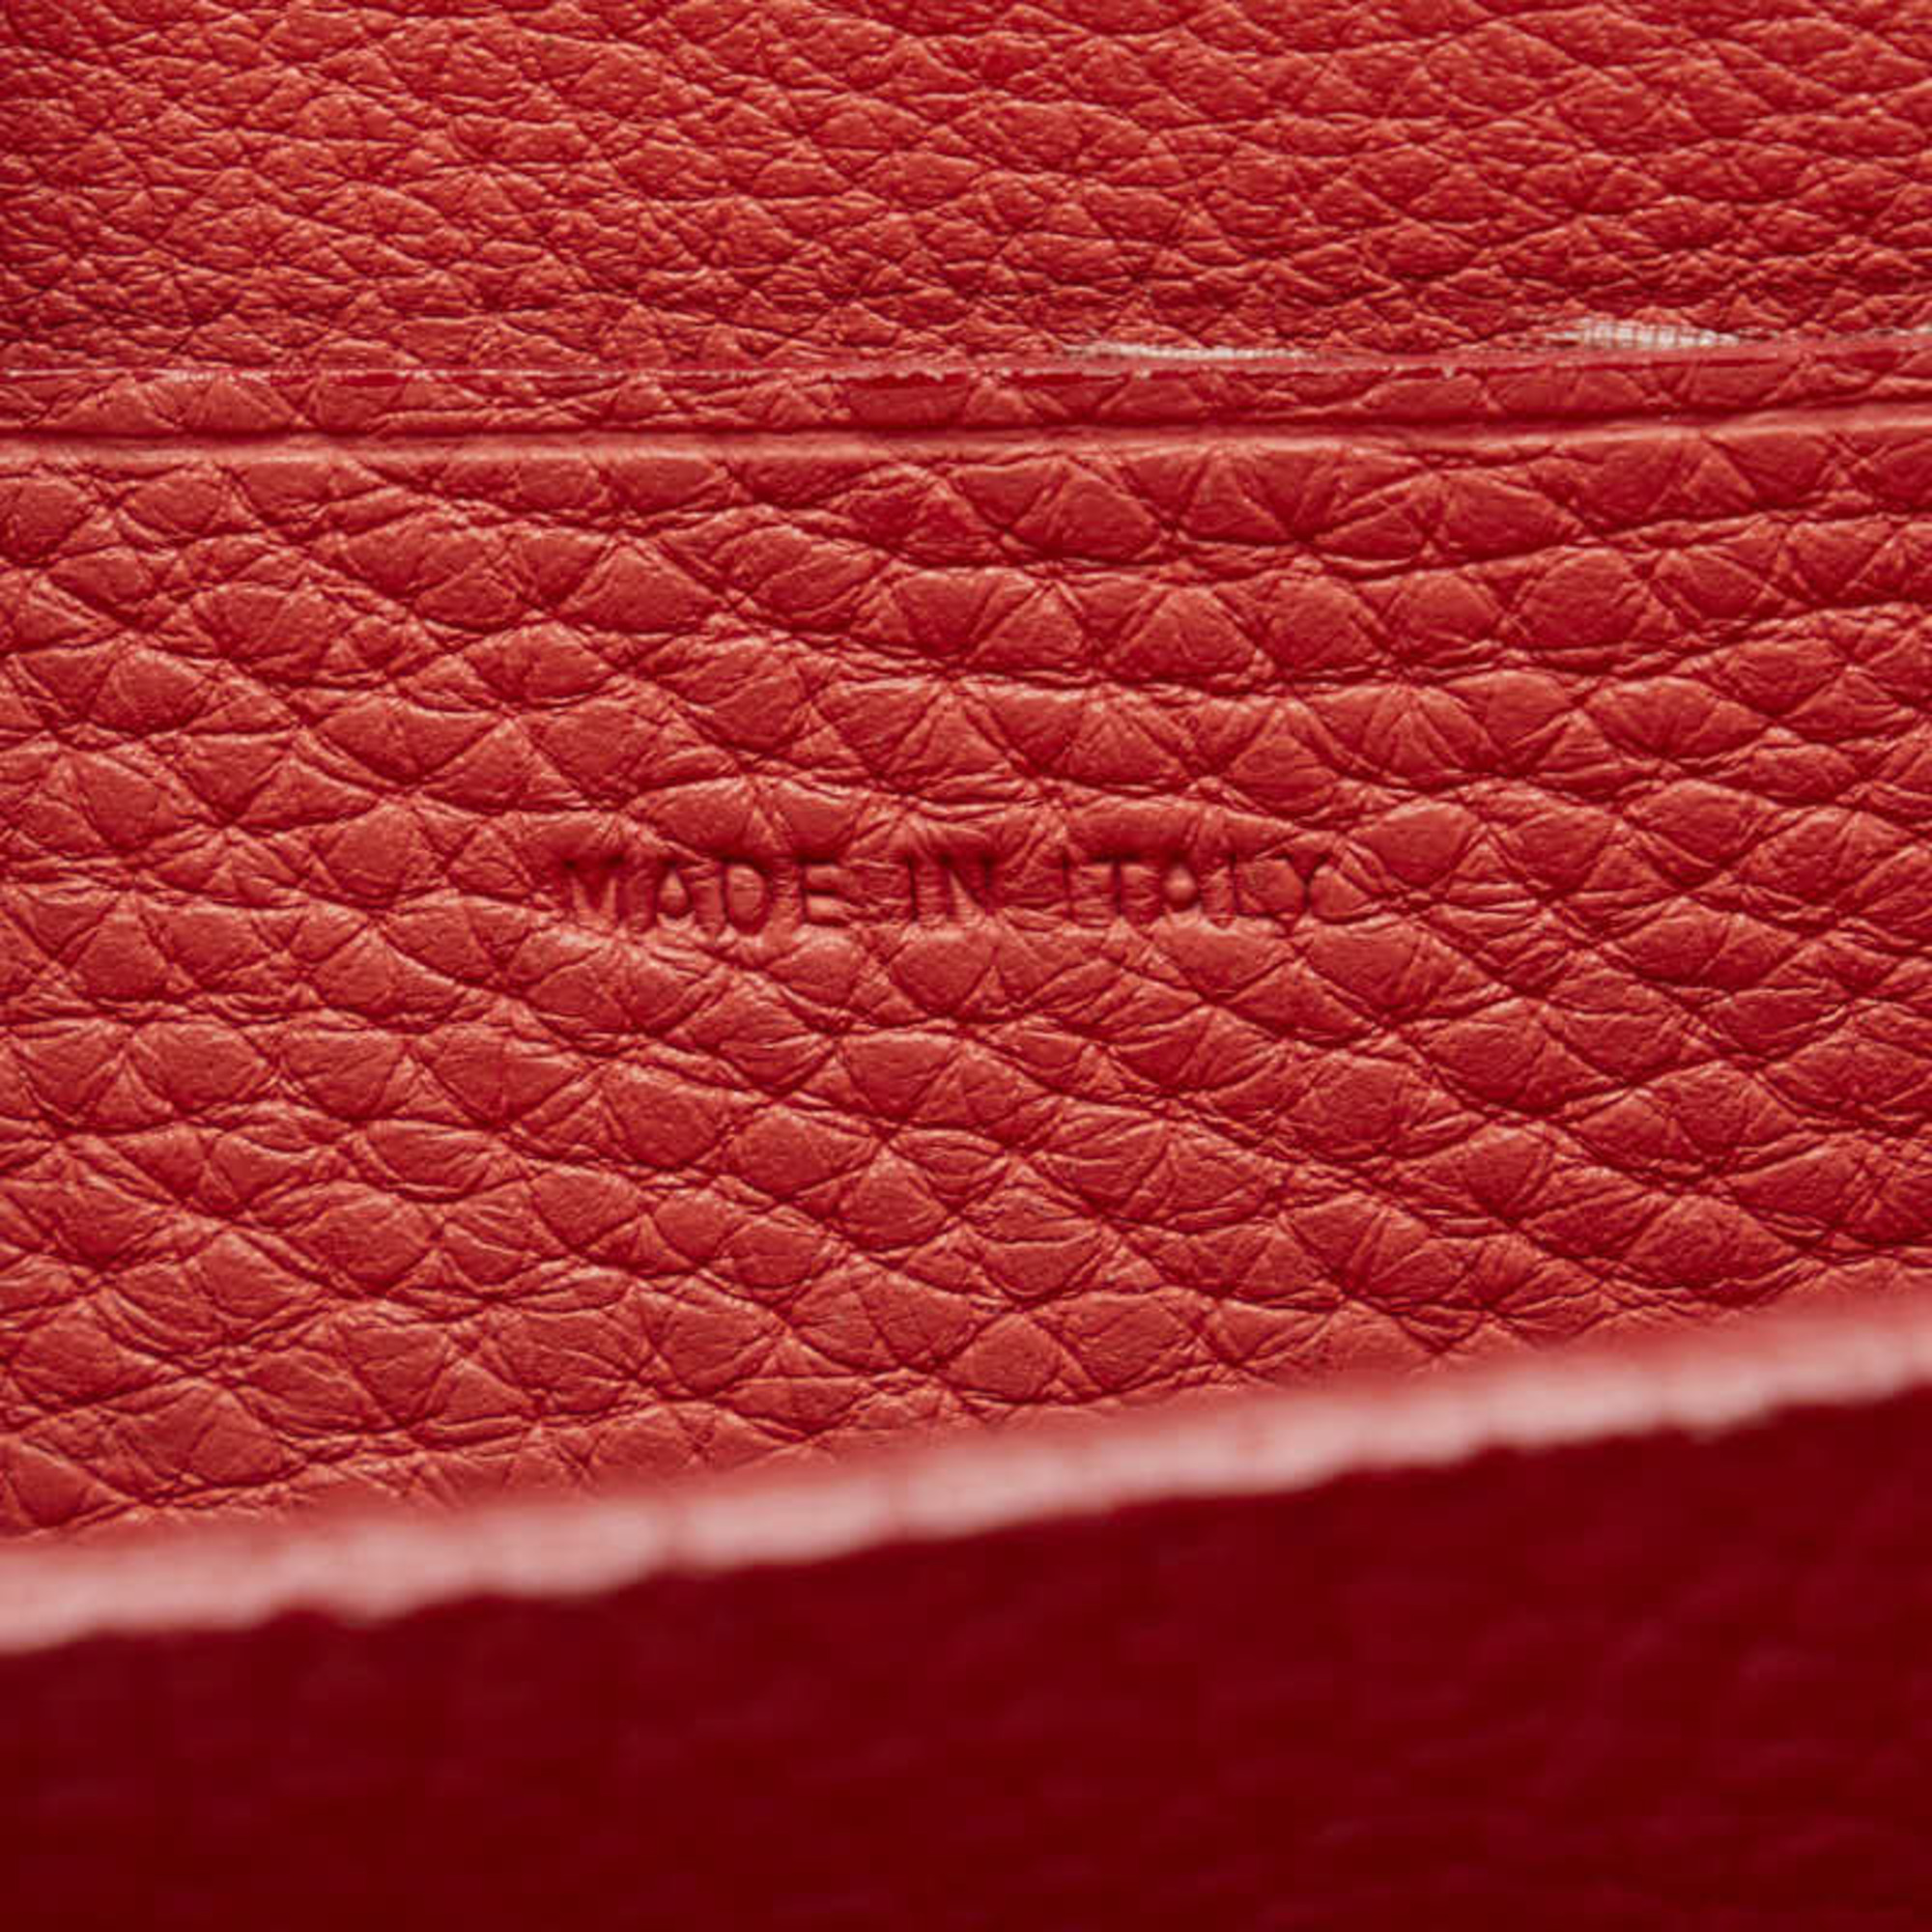 Fendi Selleria Coin Case Round 8M0006 Pink Red Leather Ladies FENDI